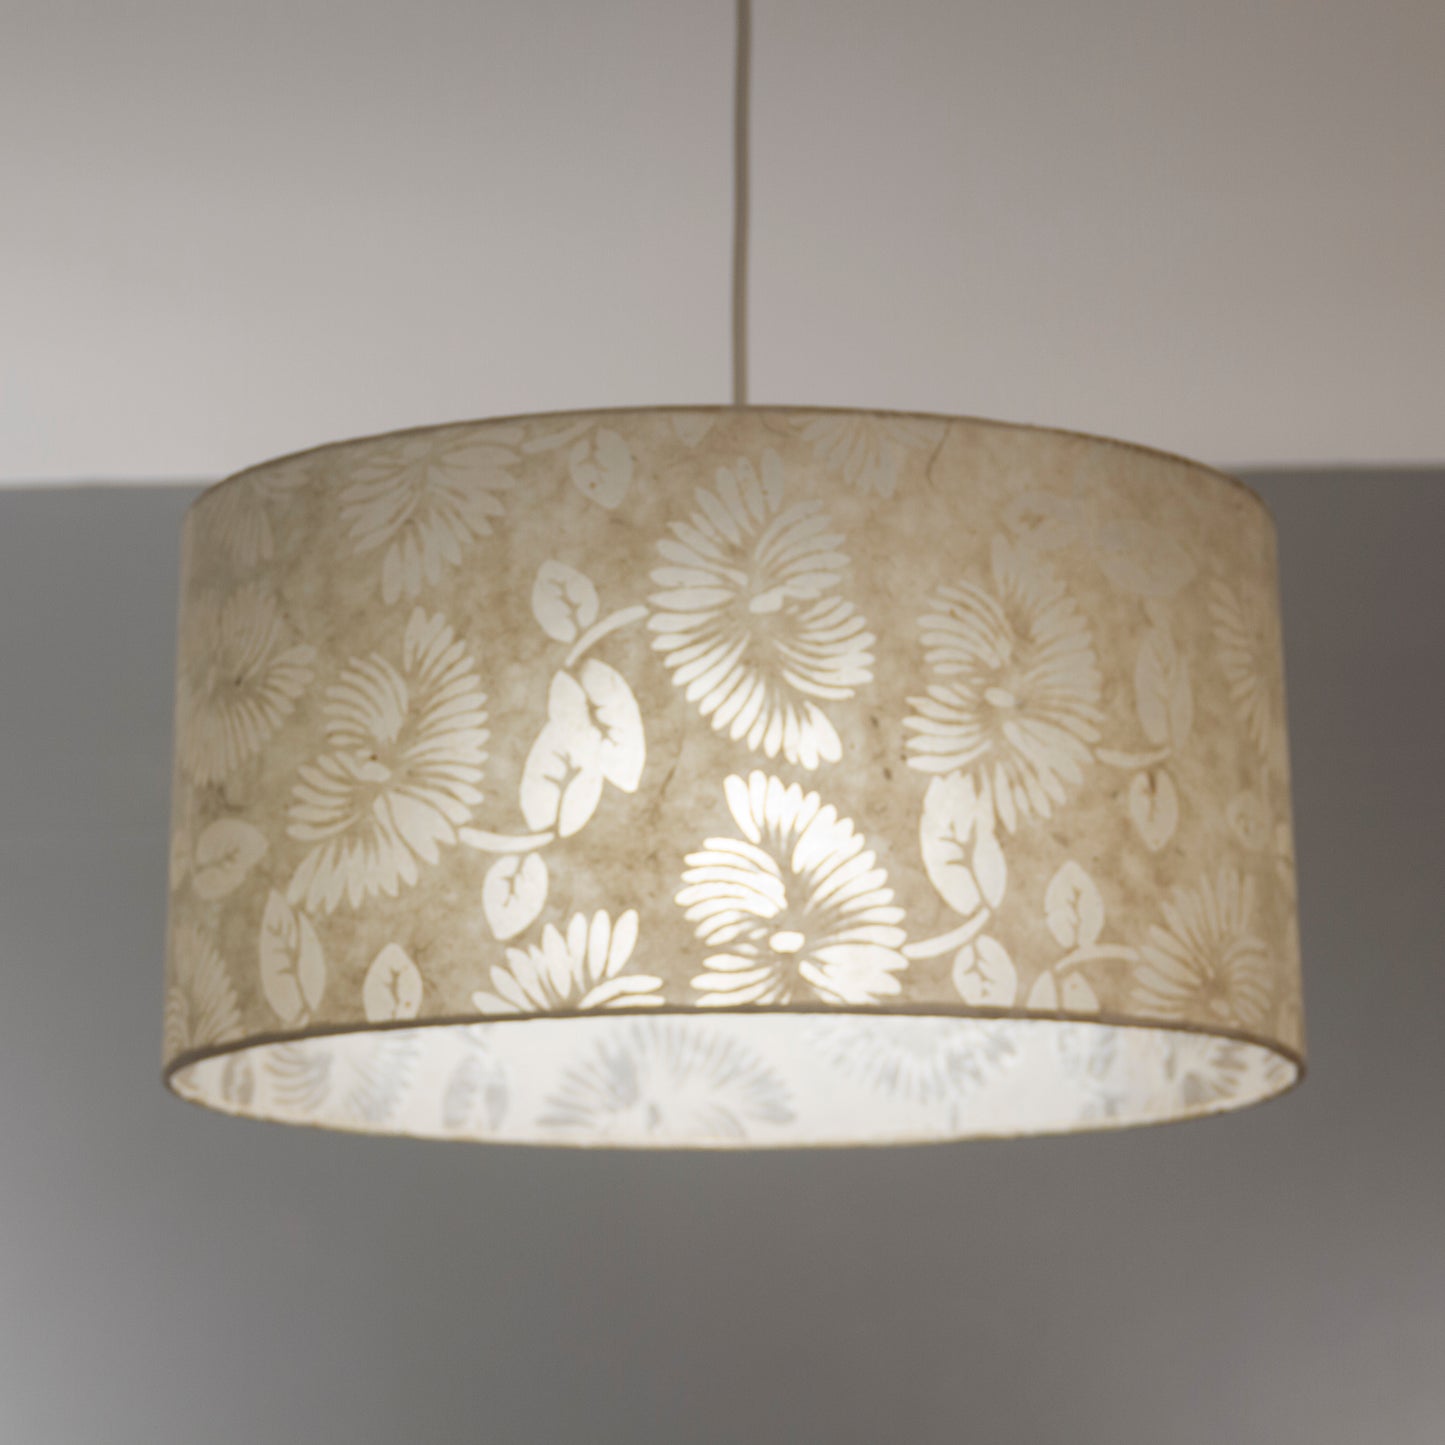 Square Lamp Shade - P09 - Batik Peony on Natural, 20cm(w) x 30cm(h) x 20cm(d)